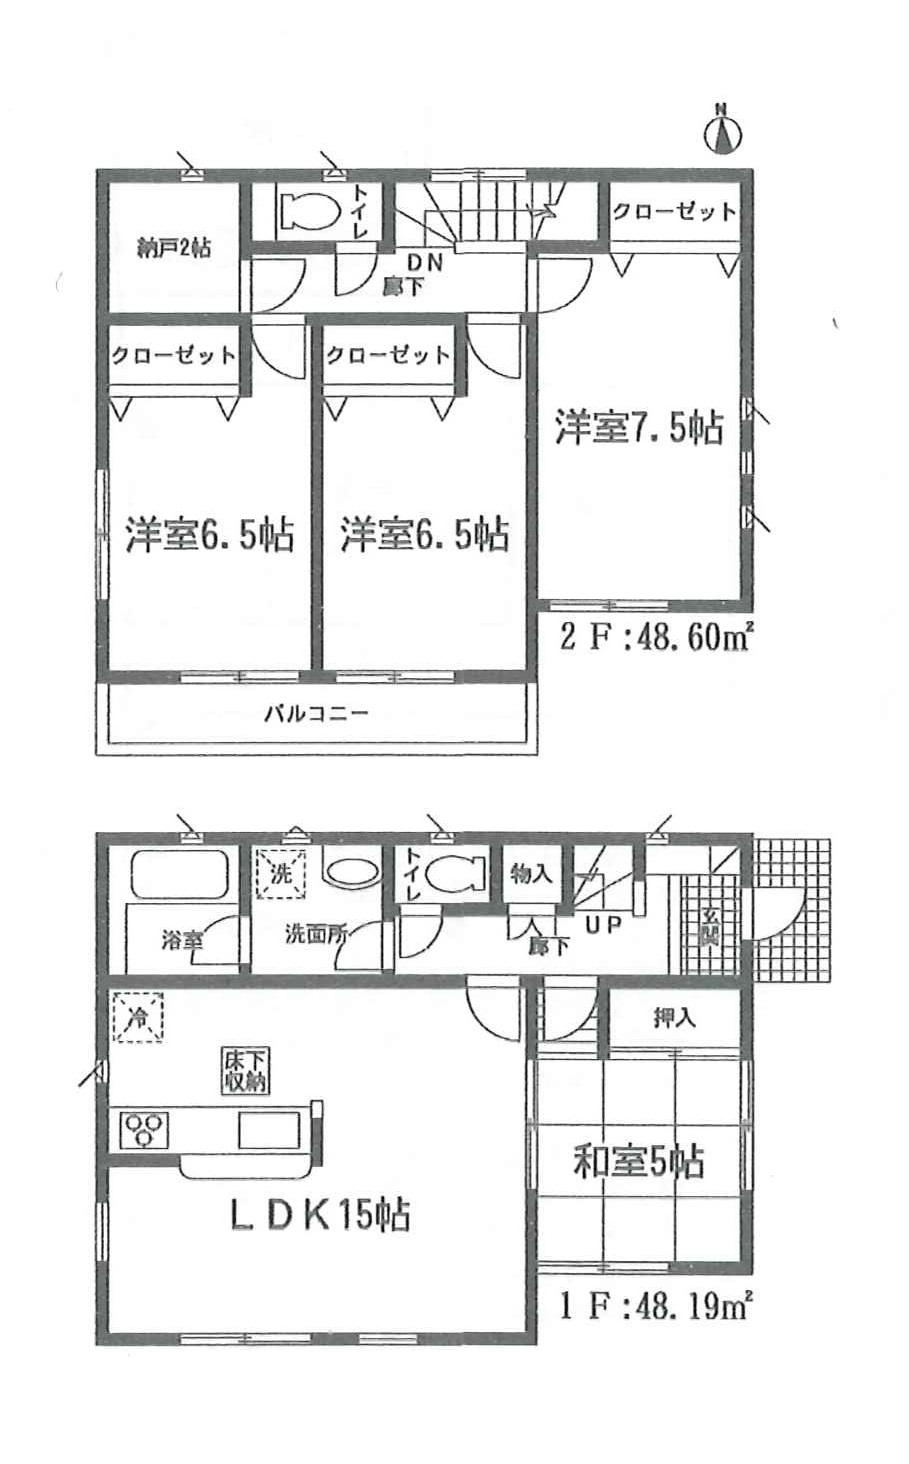 Floor plan. (3 Building), Price 26,800,000 yen, 4LDK+S, Land area 117.33 sq m , Building area 96.79 sq m